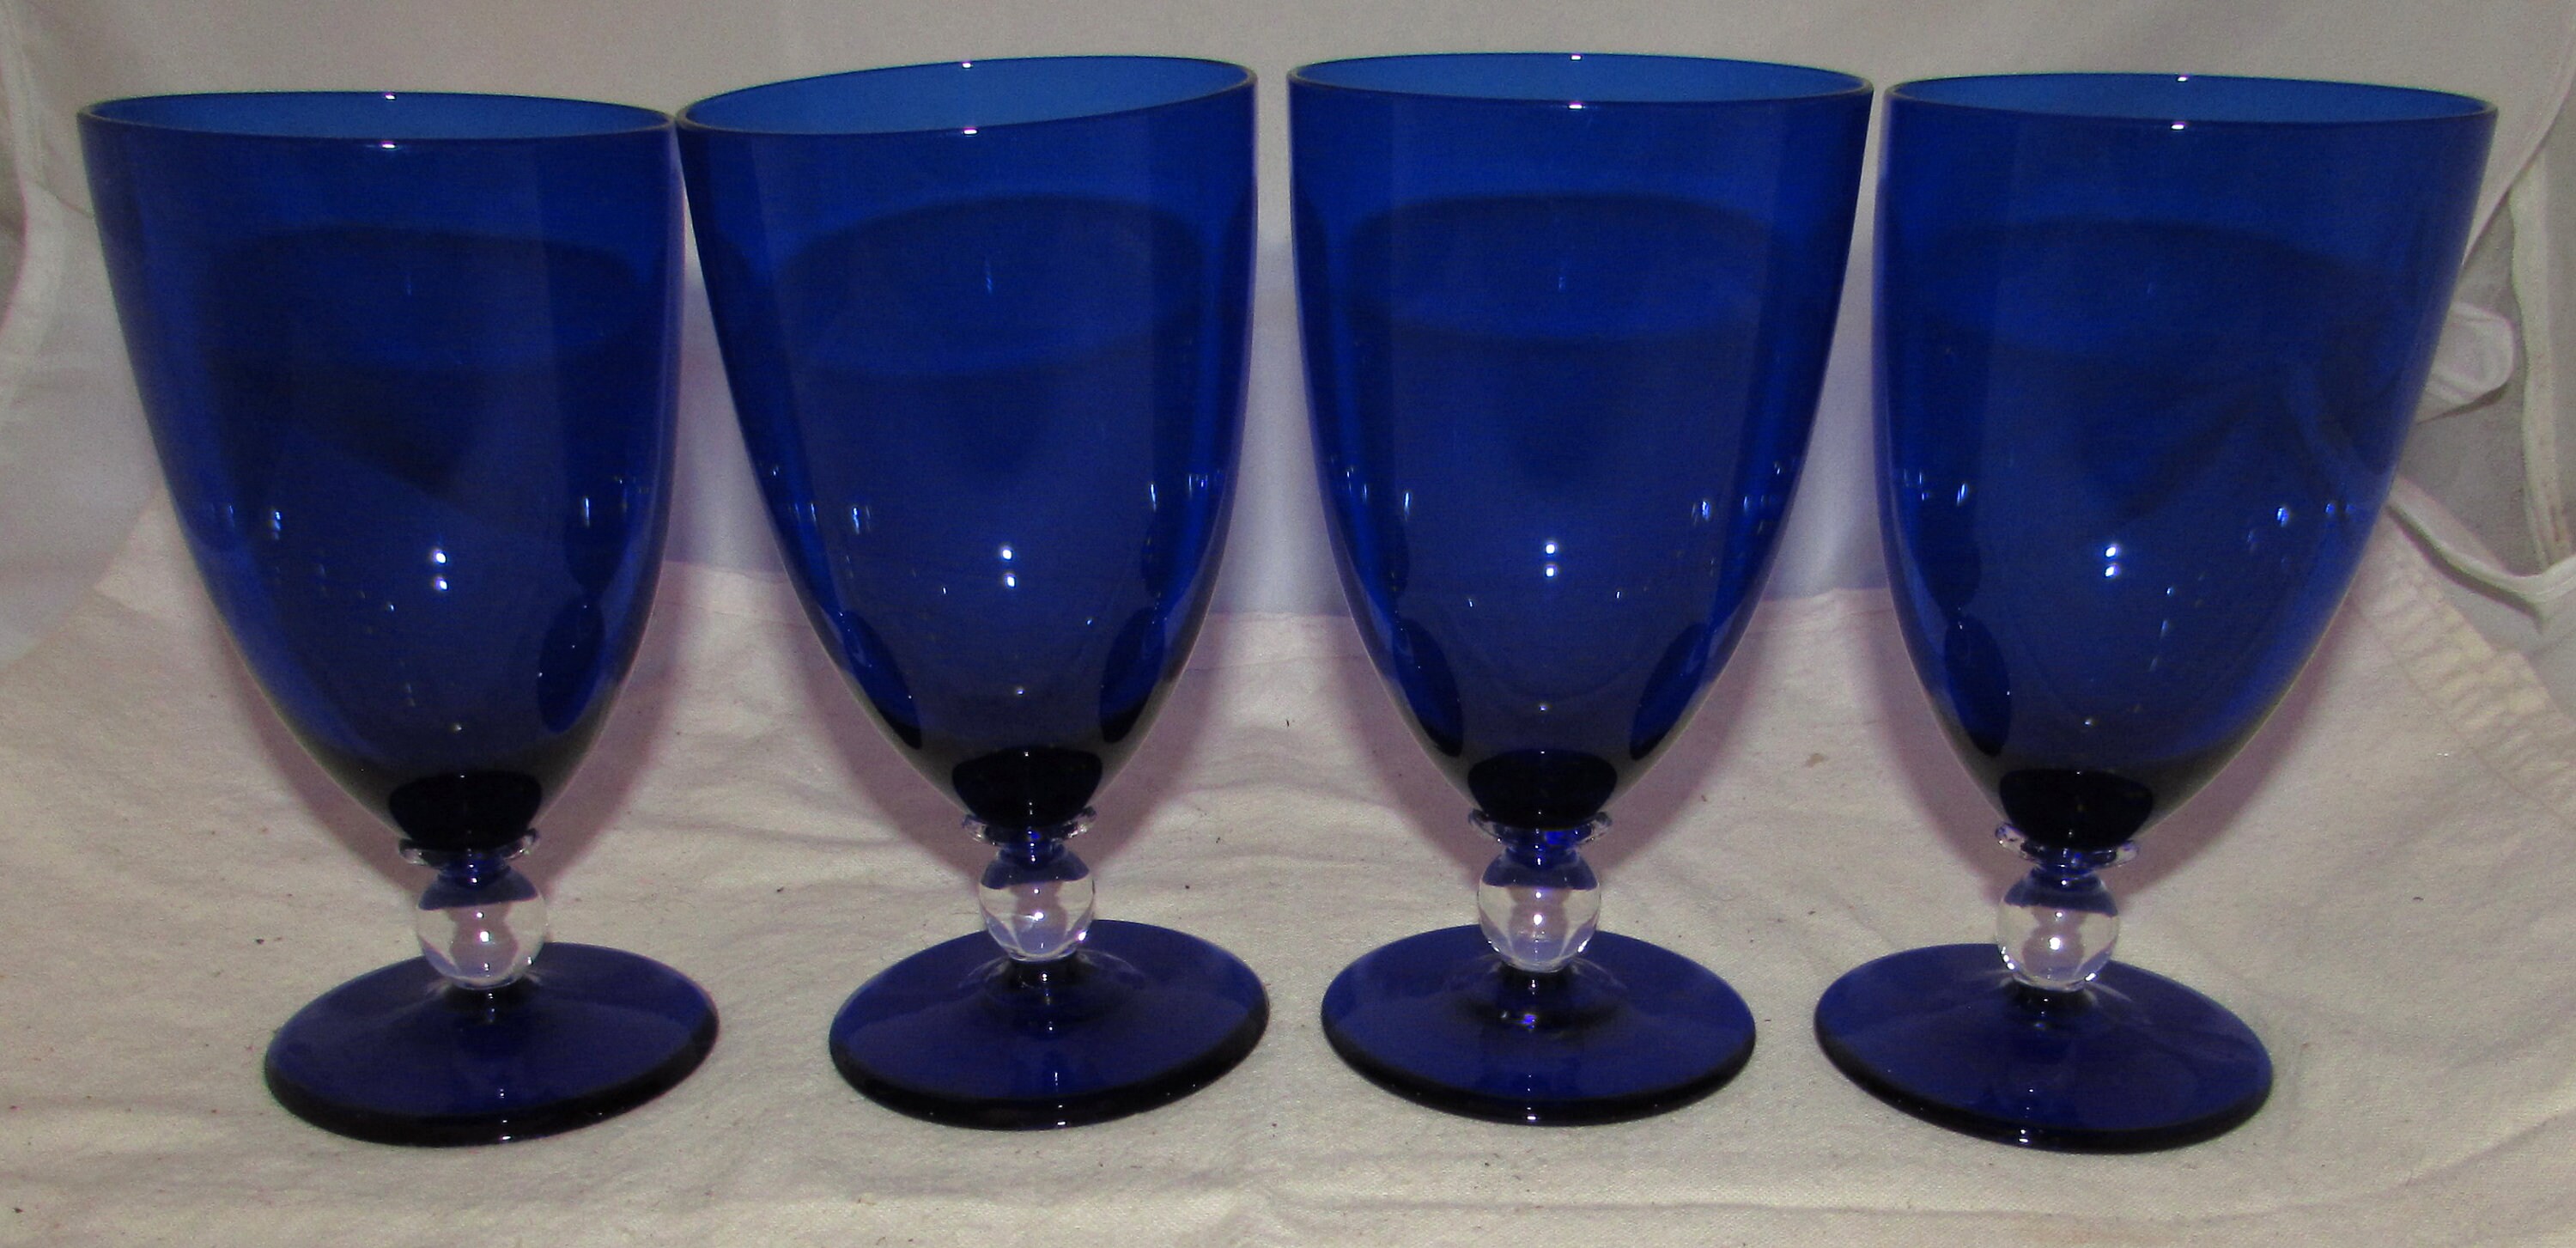 Custom Vina Tall Wine Glass - 18.5 oz. - Printed School Supplies